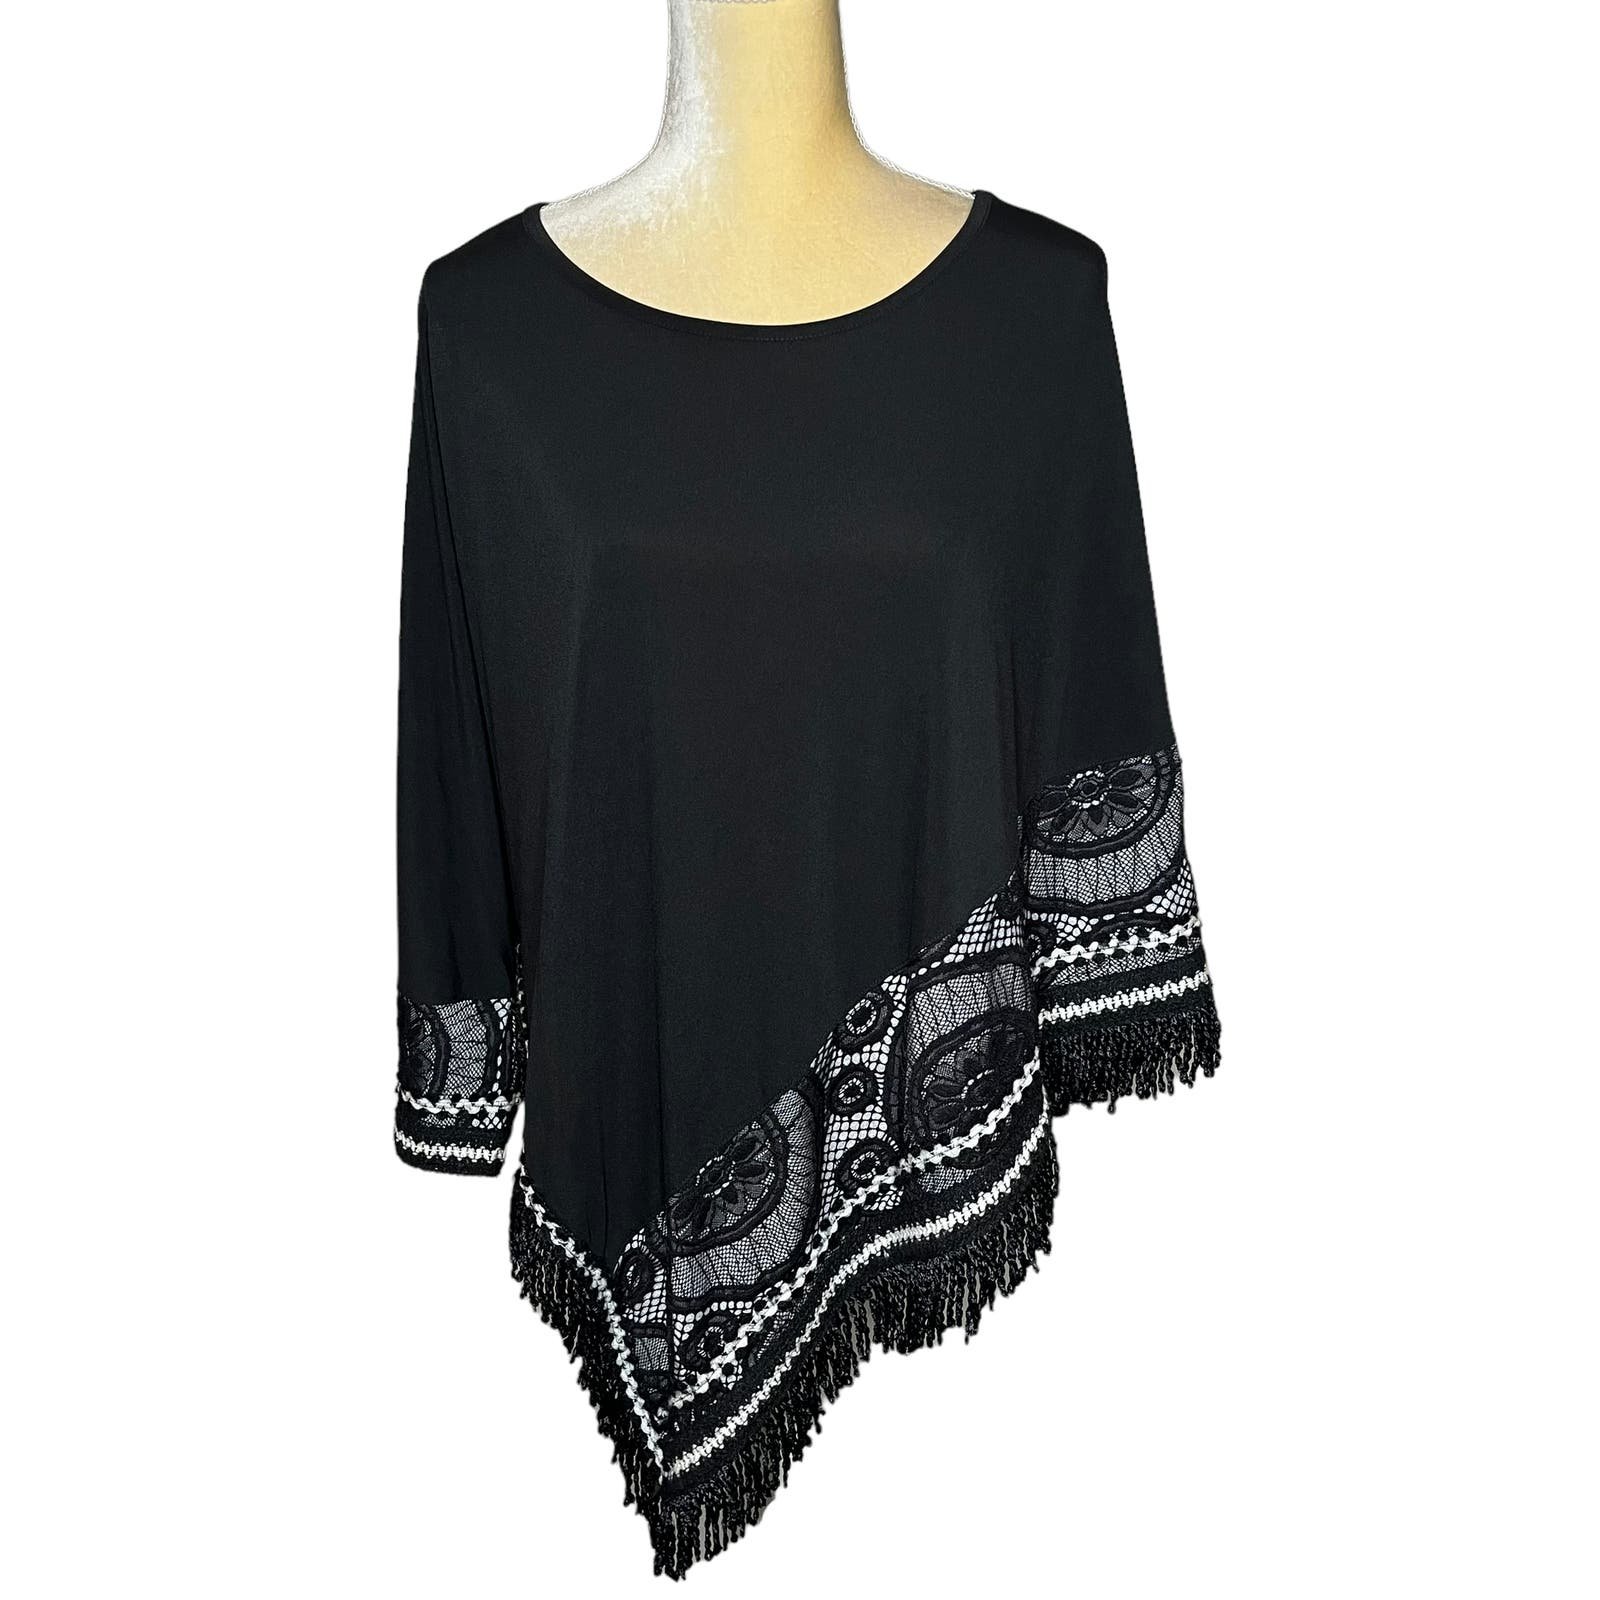 Fashion Dor Dor Couture Poncho Top Blouse Black w/ Fringe Asymmetrical Size Large IgA2MLRYC Store Online